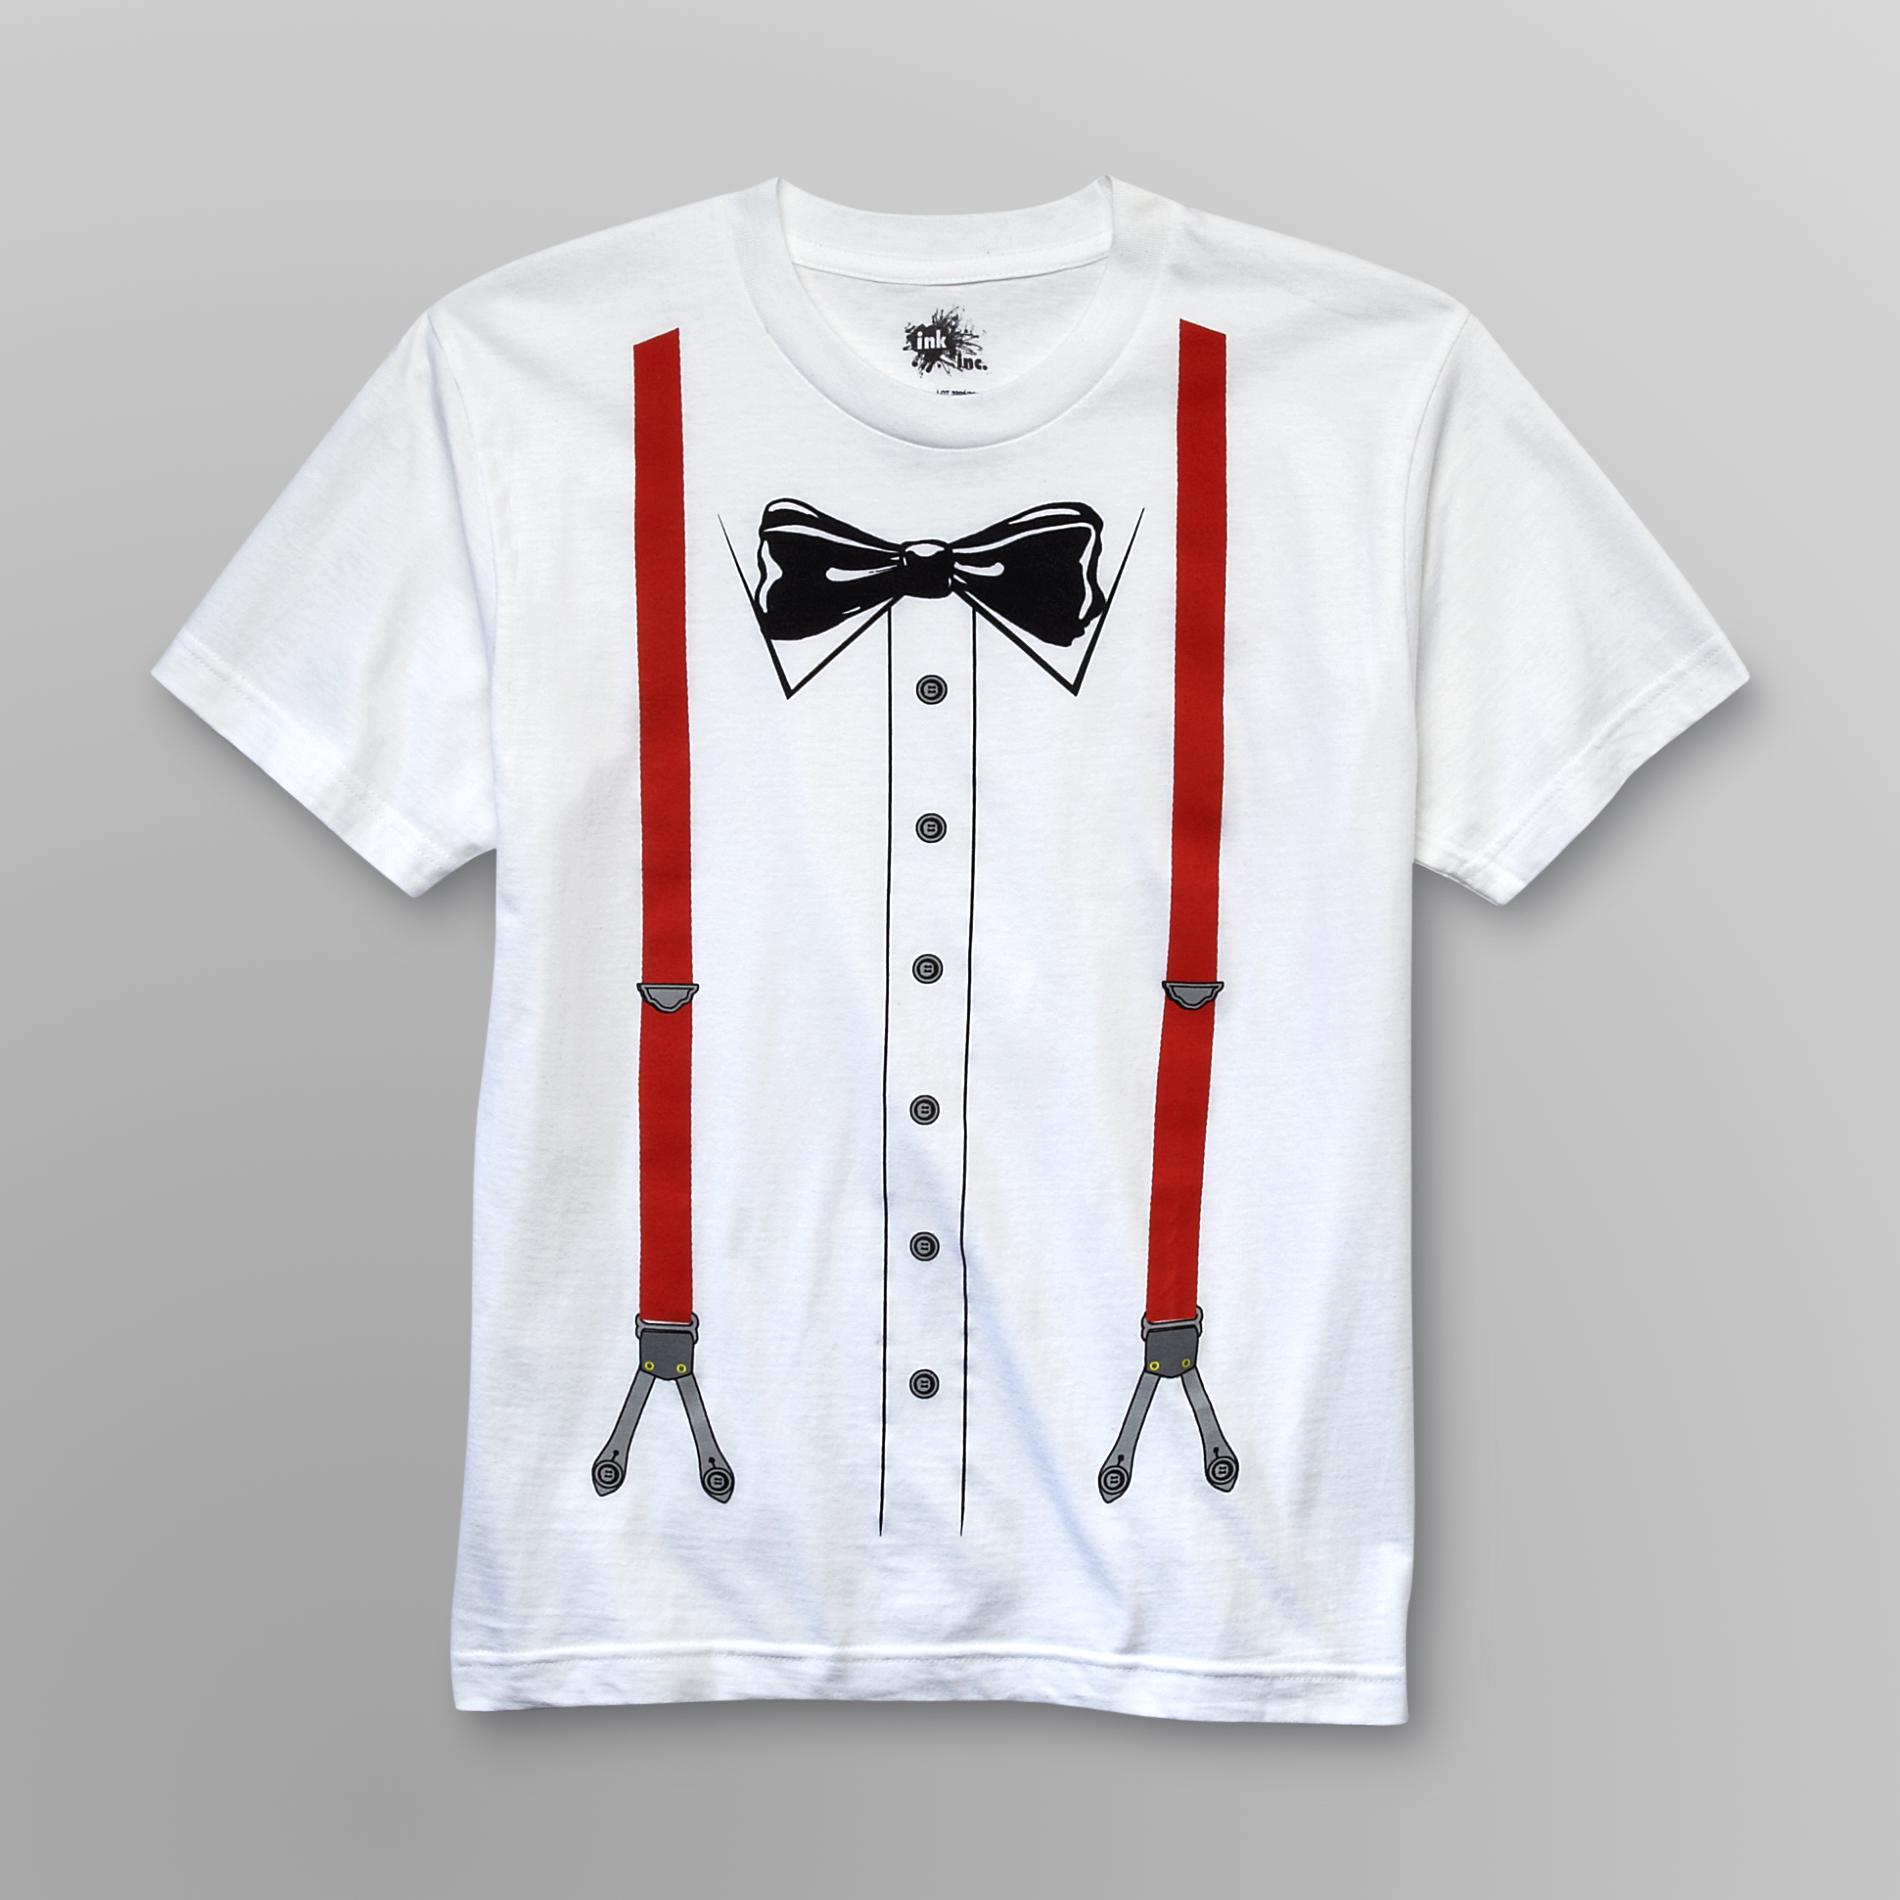 Infinite Visions Boy's Graphic T-Shirt - Tuxedo White